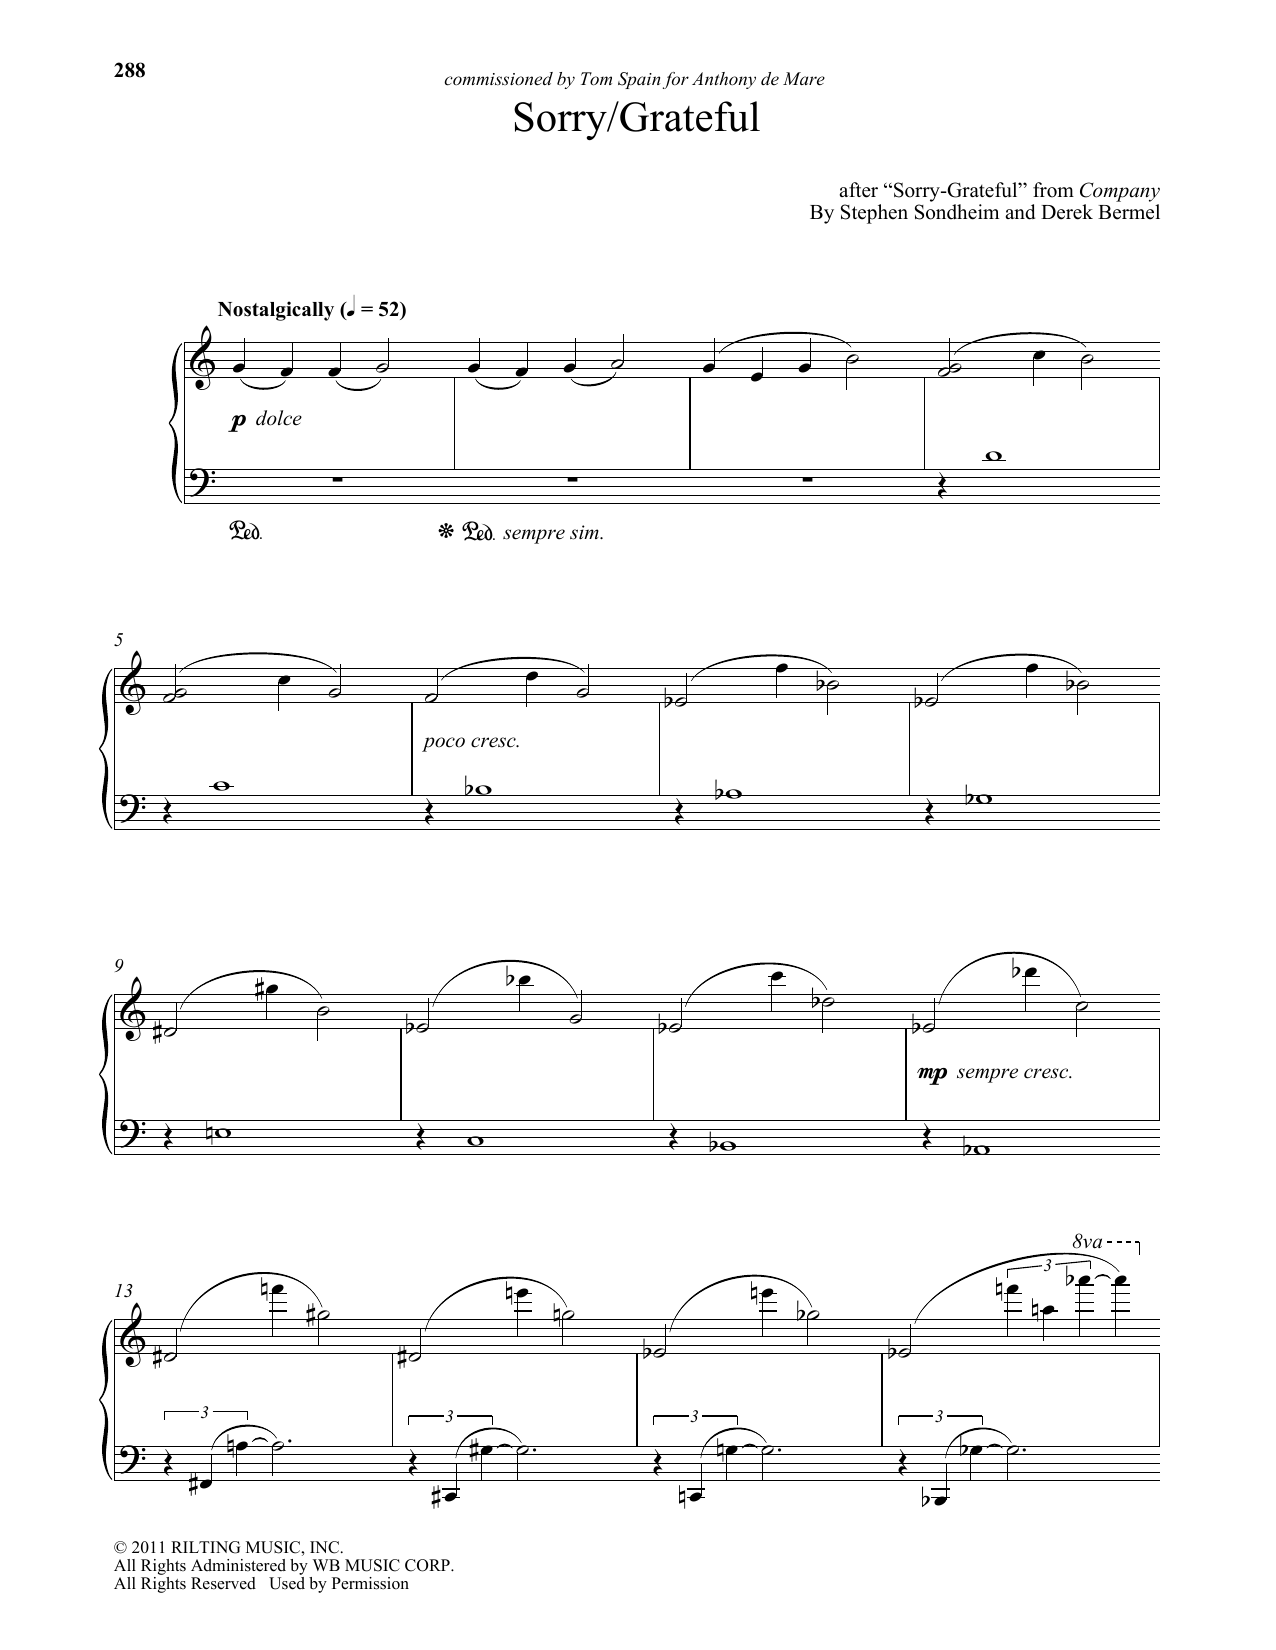 Download Stephen Sondheim Sorry - Grateful (arr. Derek Bermel) Sheet Music and learn how to play Piano PDF digital score in minutes